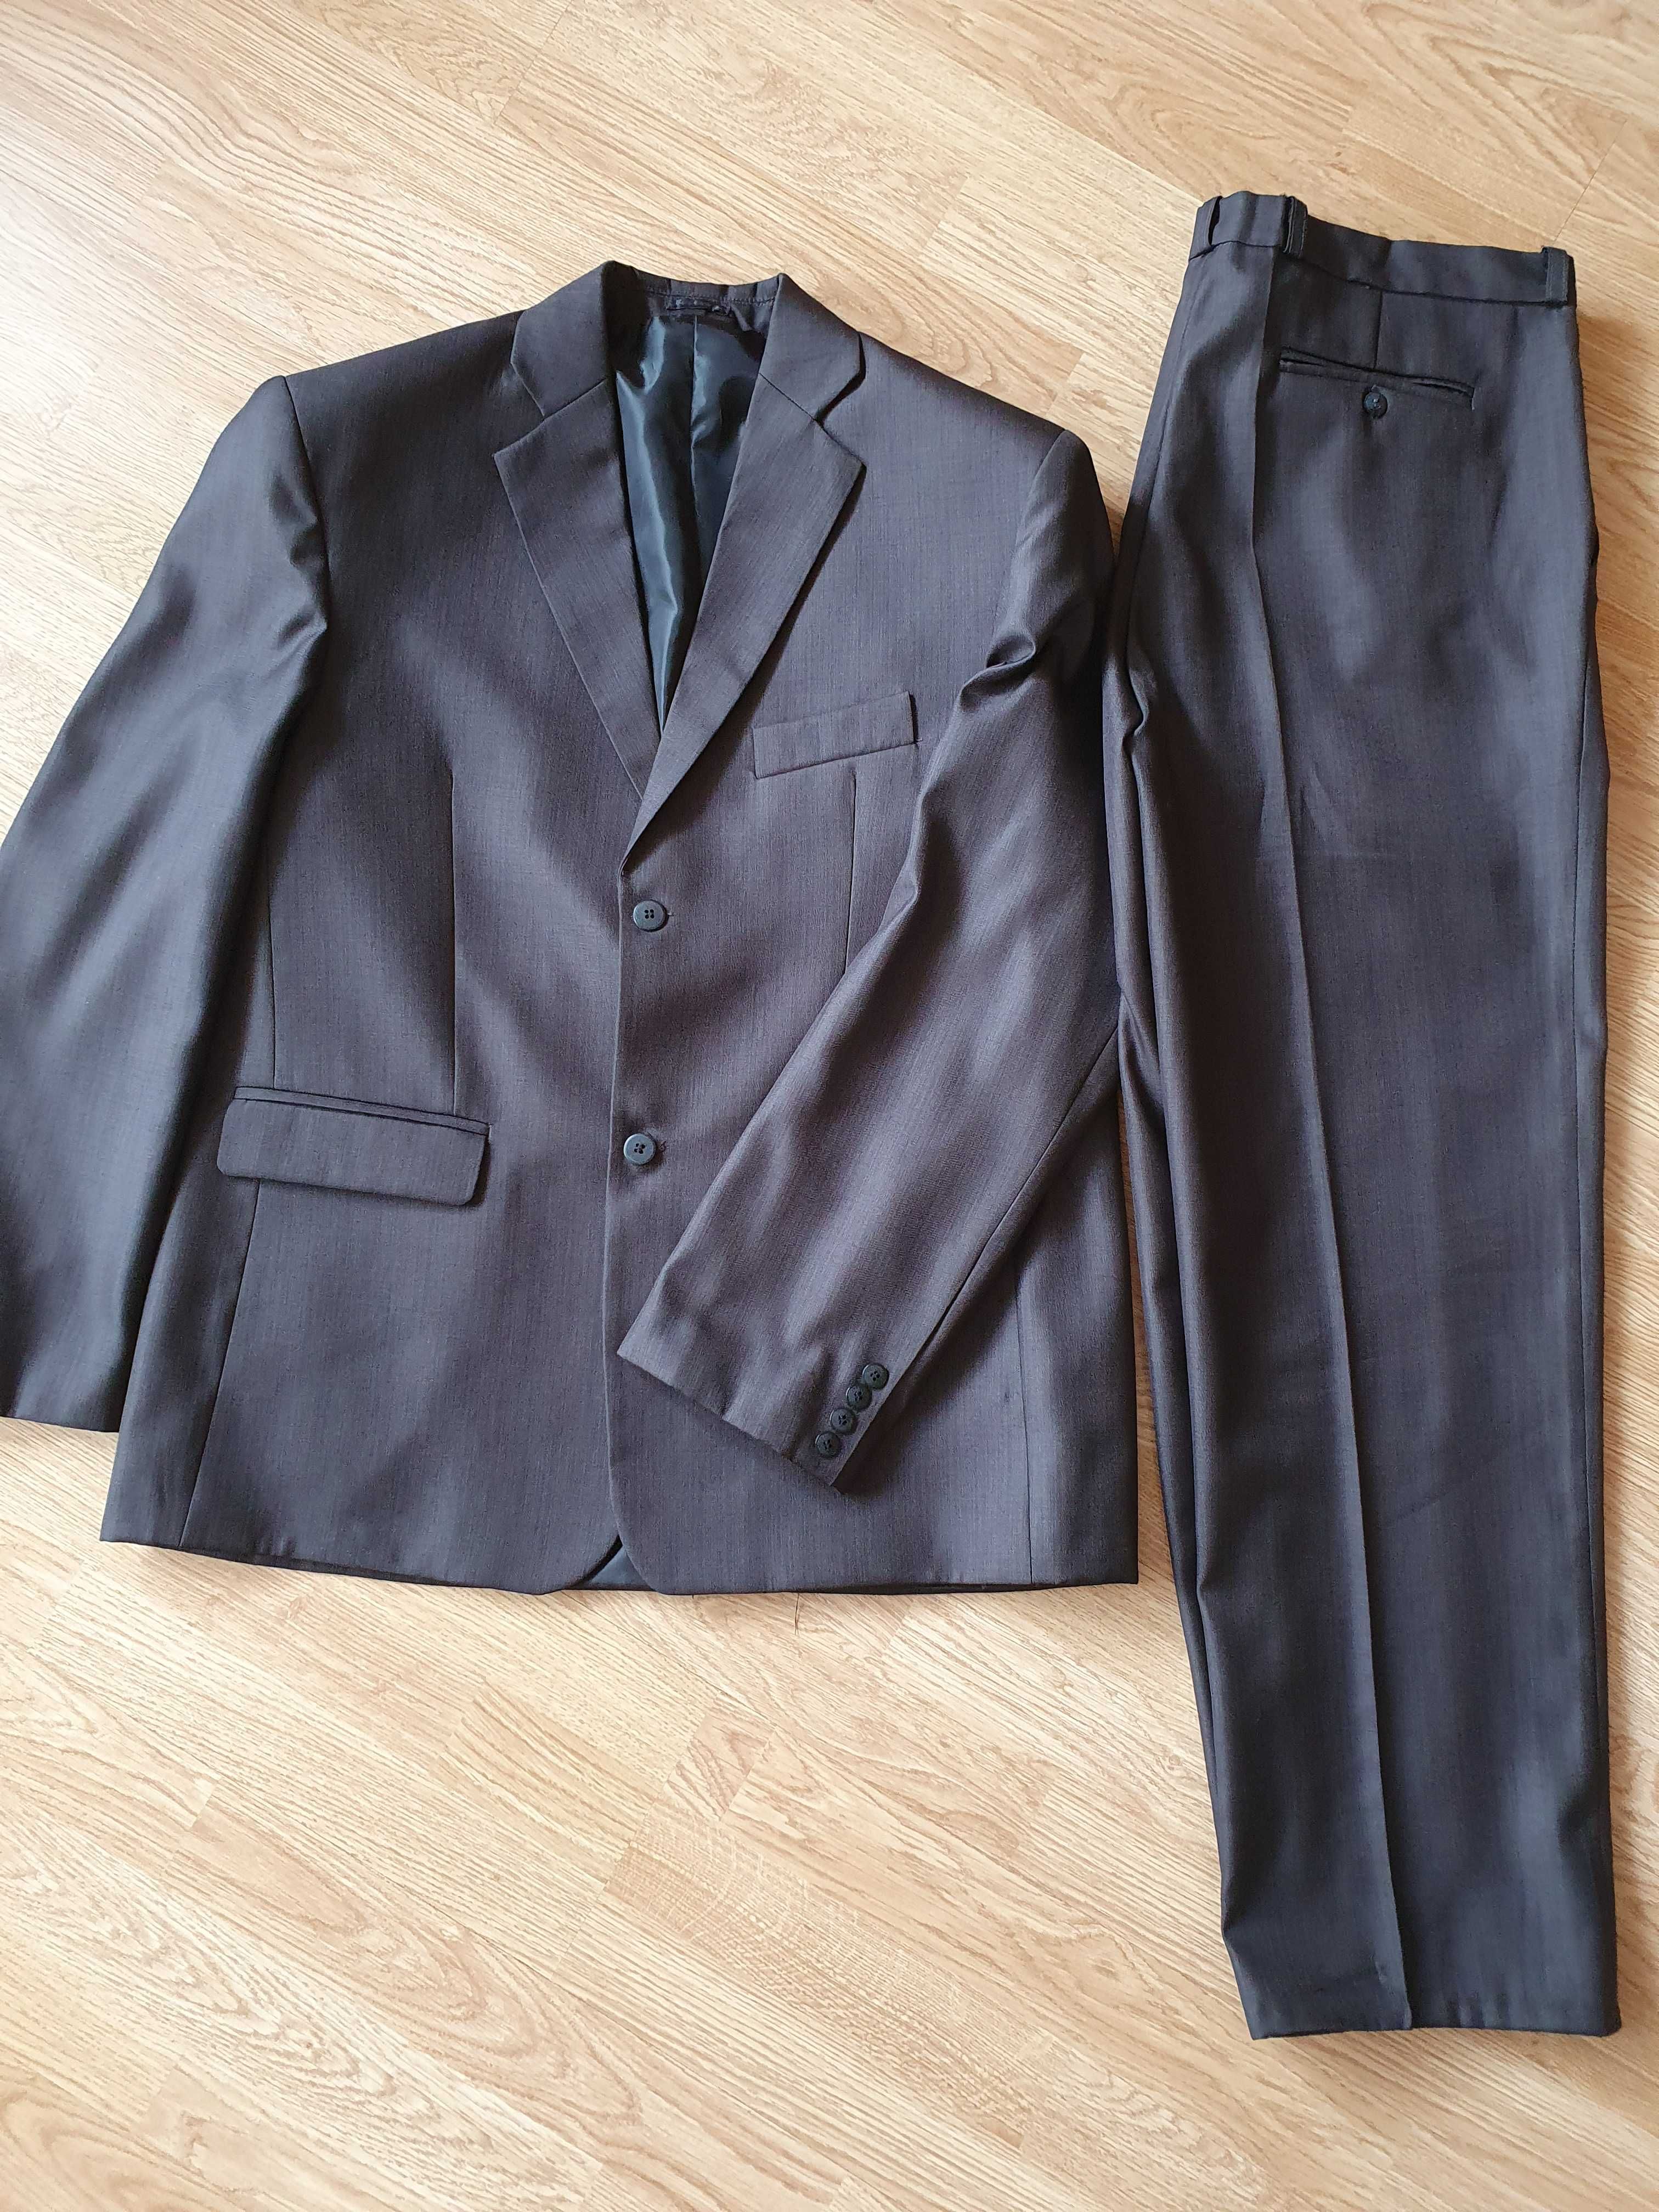 Czarny garnitur komplet - marynarka i spodnie